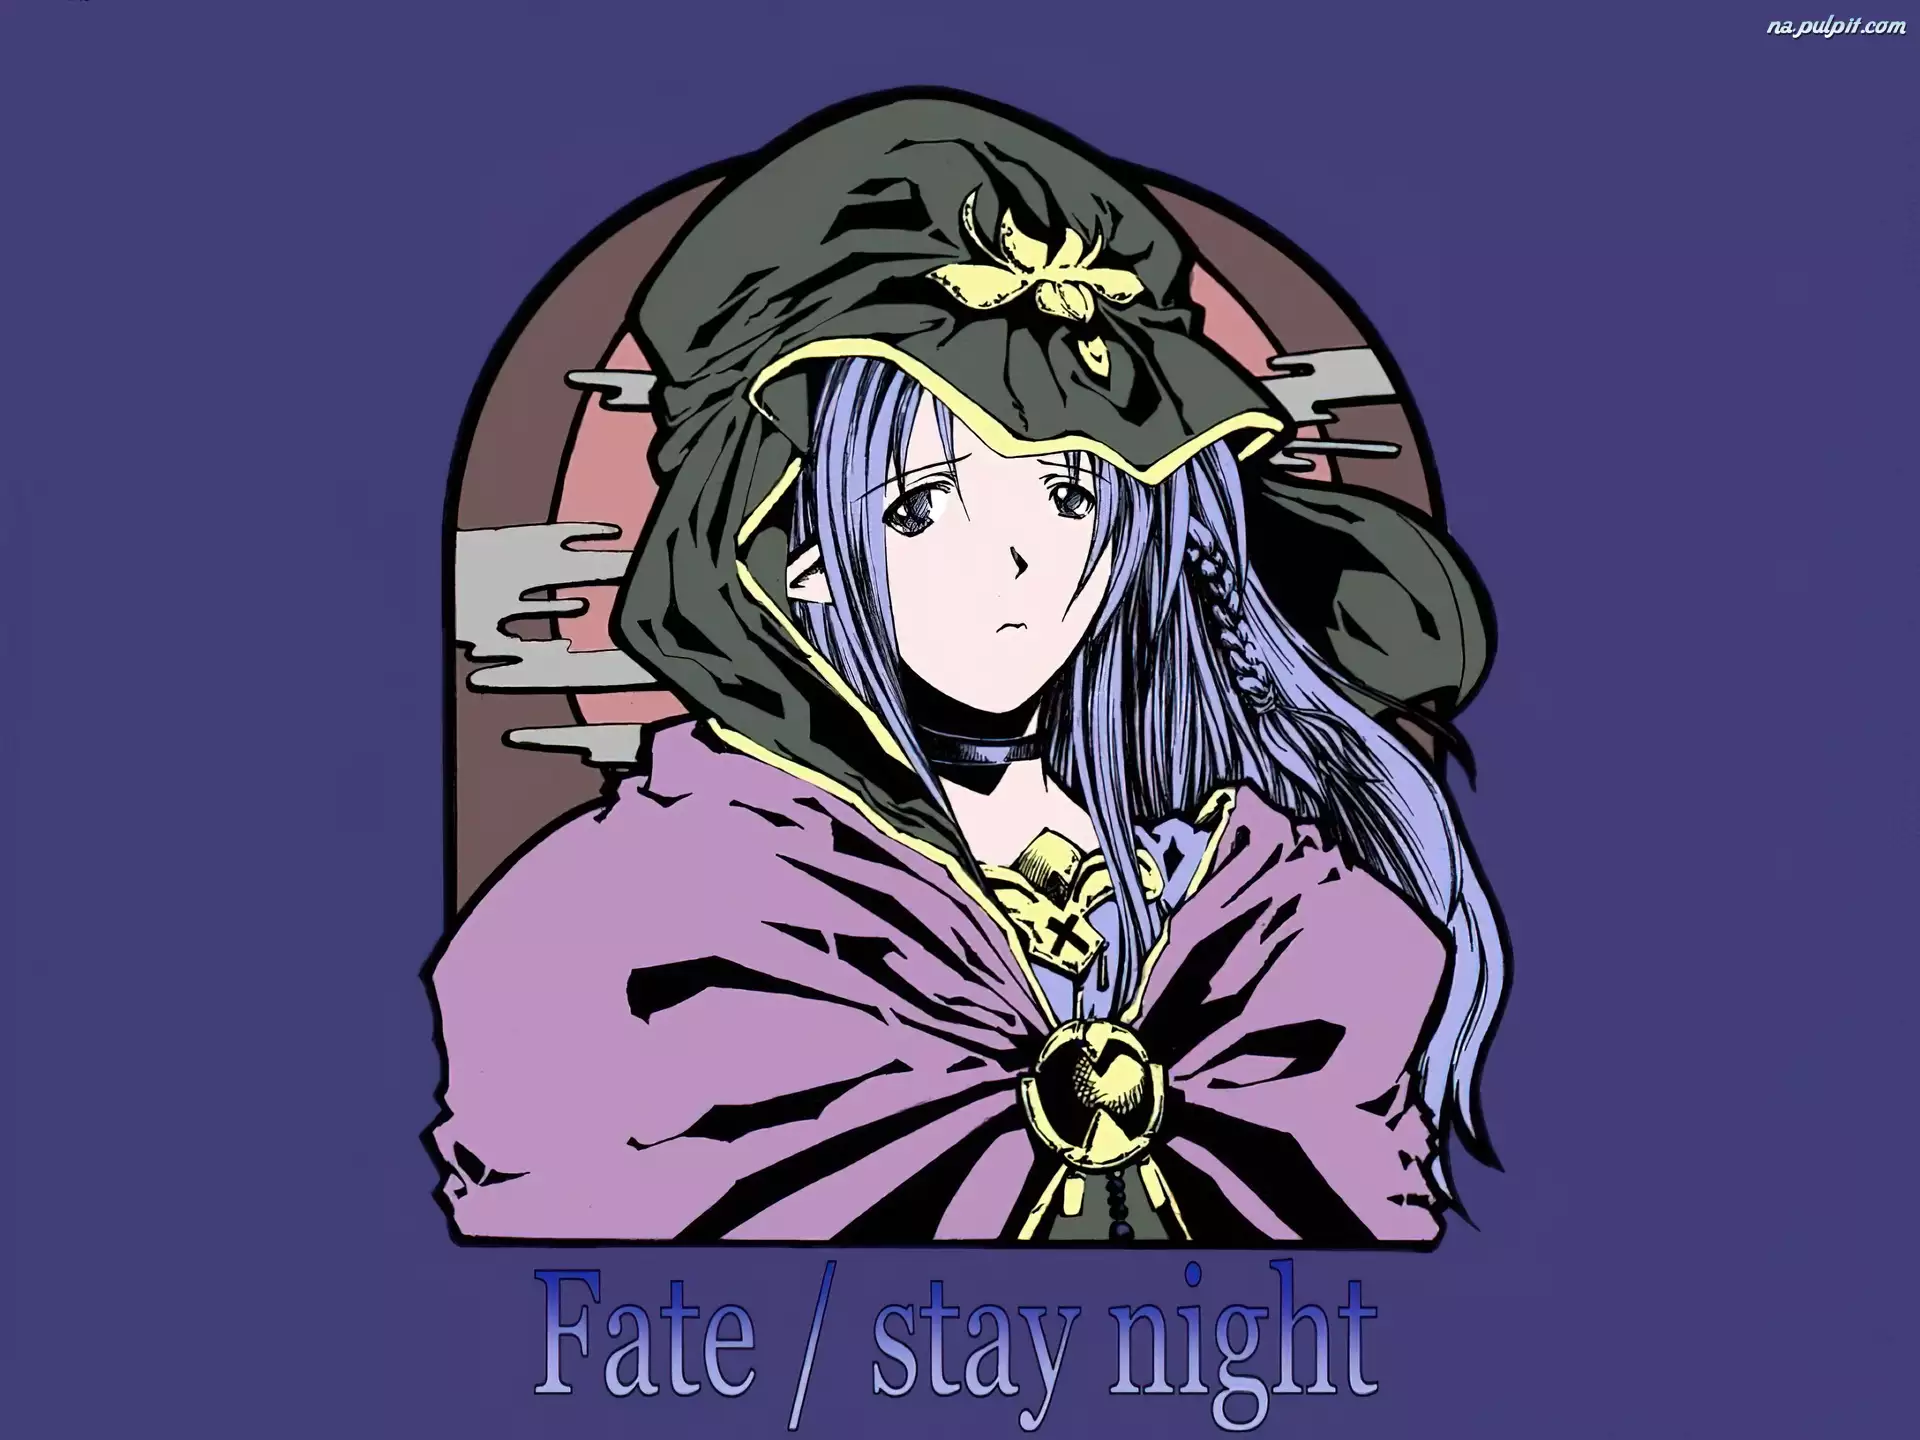 staruszka, Fate Stay Night, napisy, postać